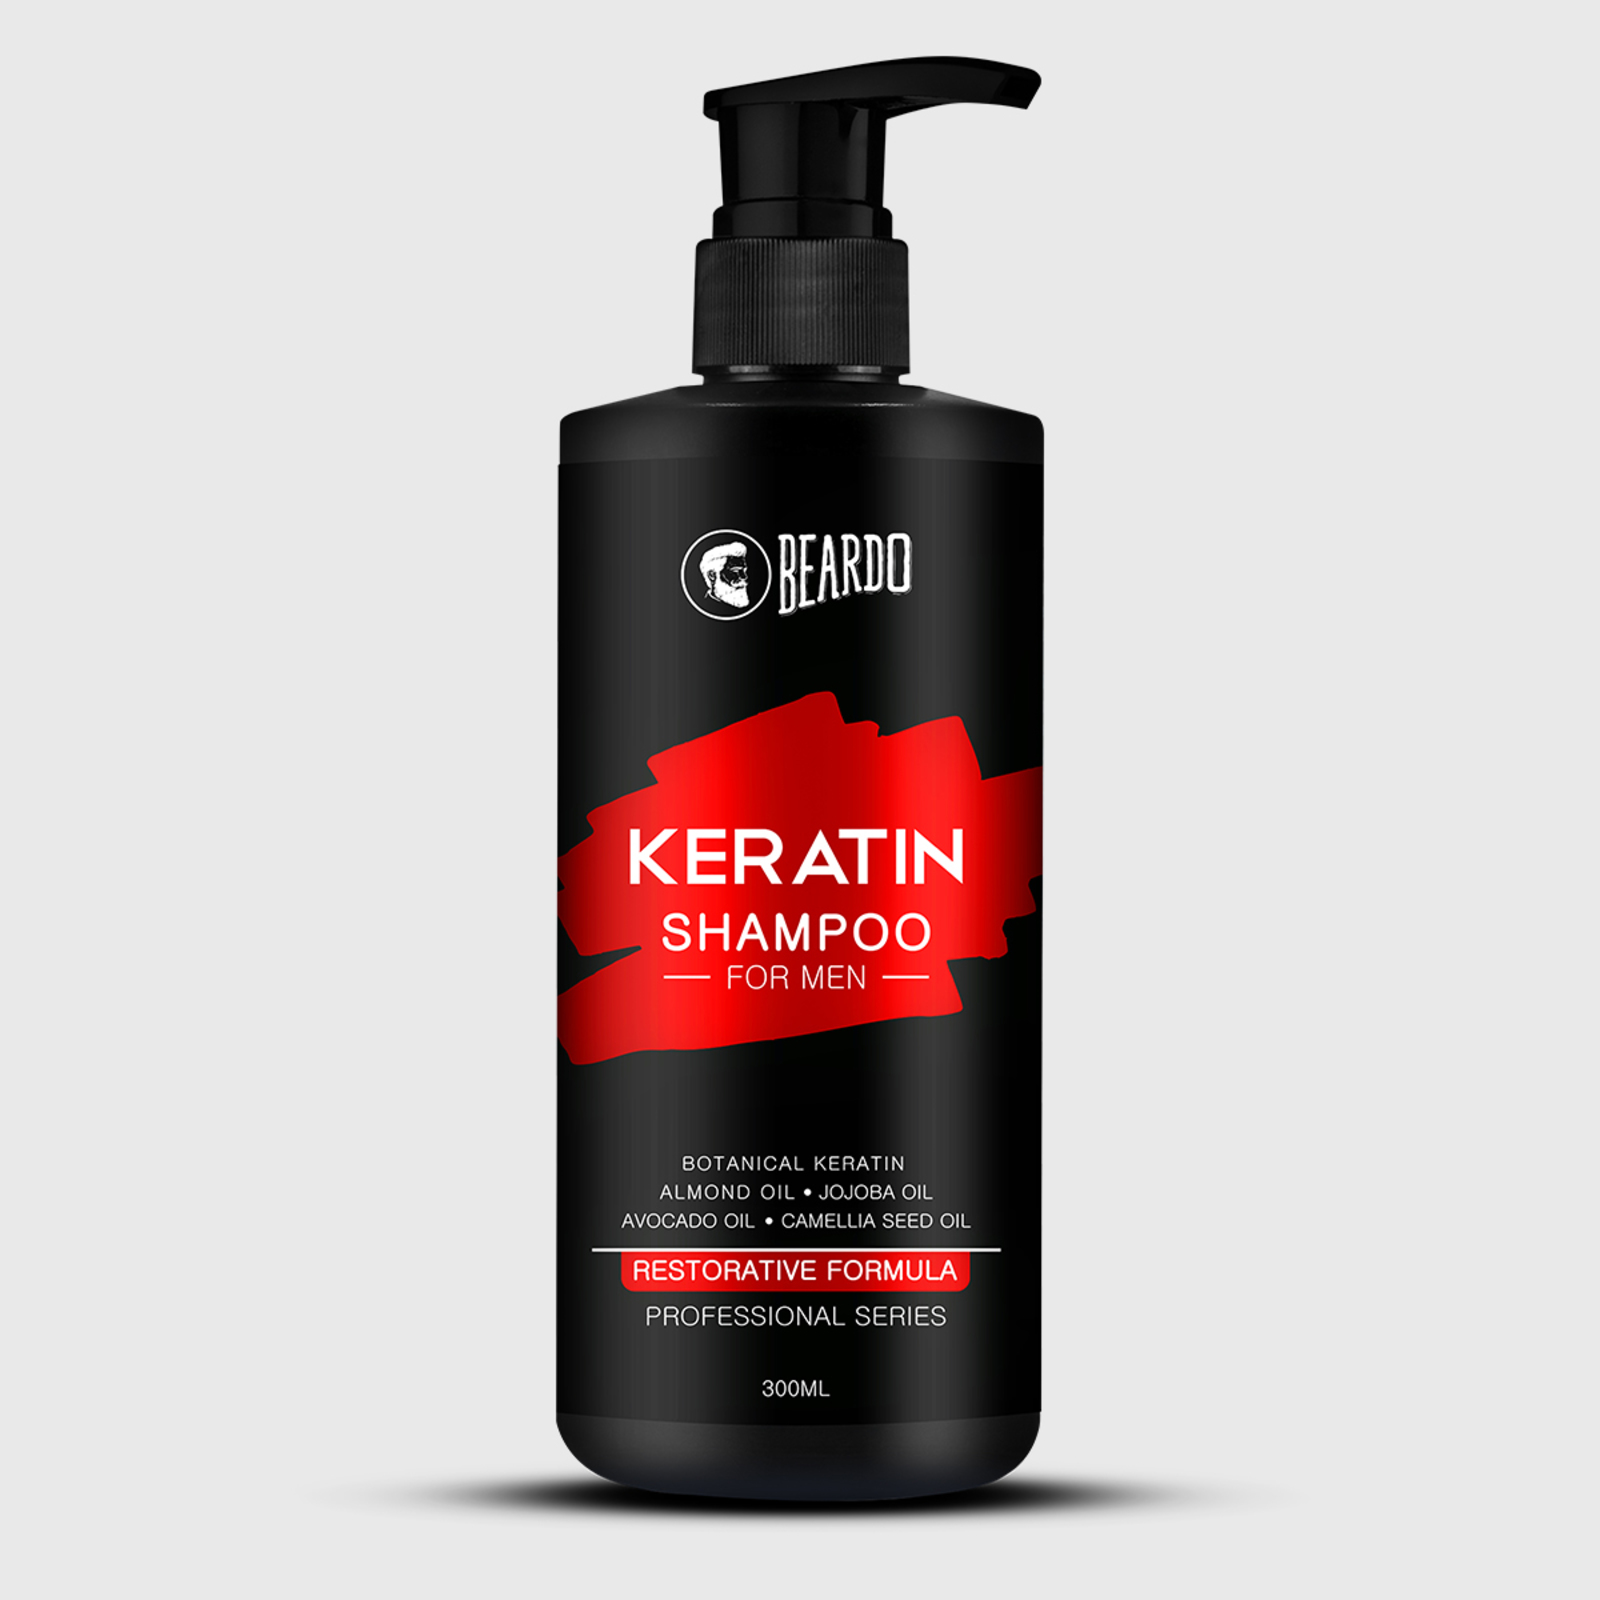 Beardo Keratin Shampoo for Men coupon code